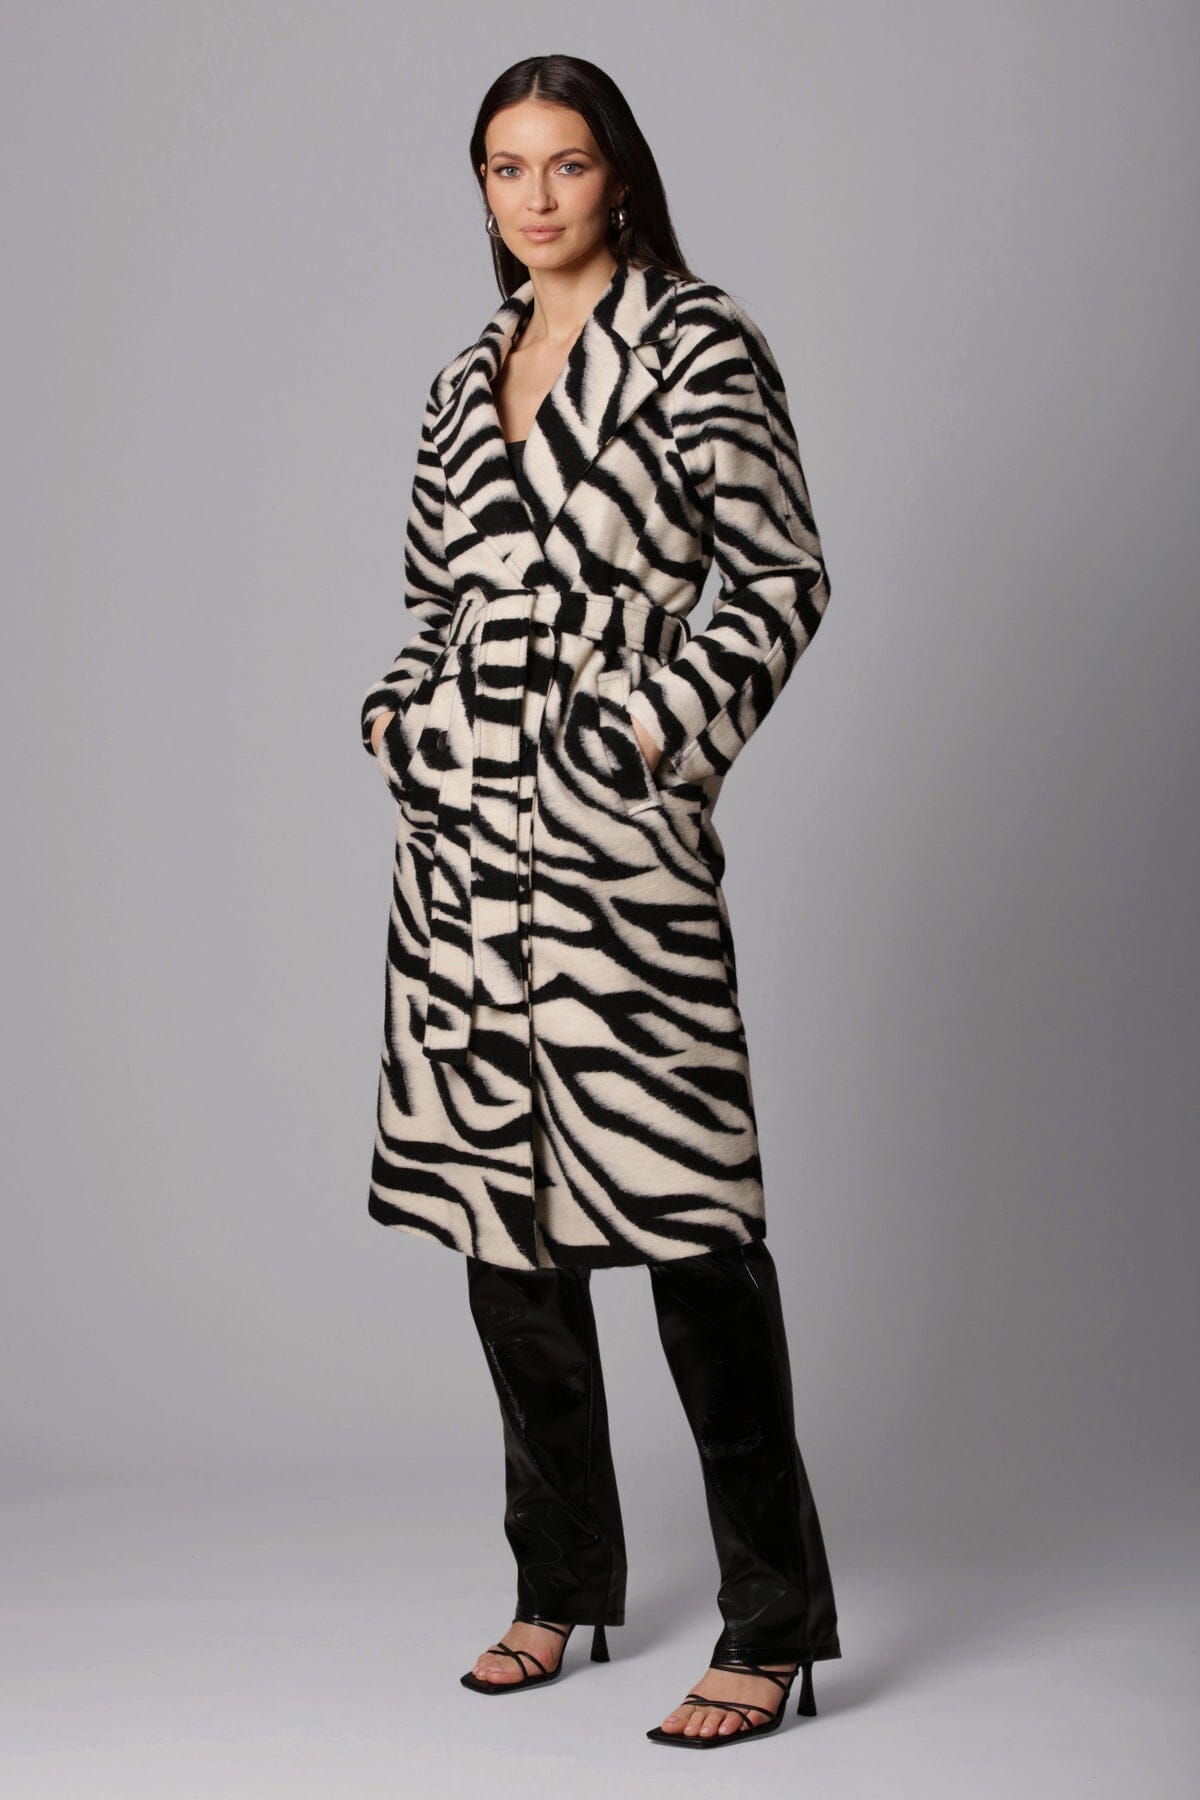 black white zebra print belted robe walker coat - figure flattering designer fashion girls night out coats outerwear for women